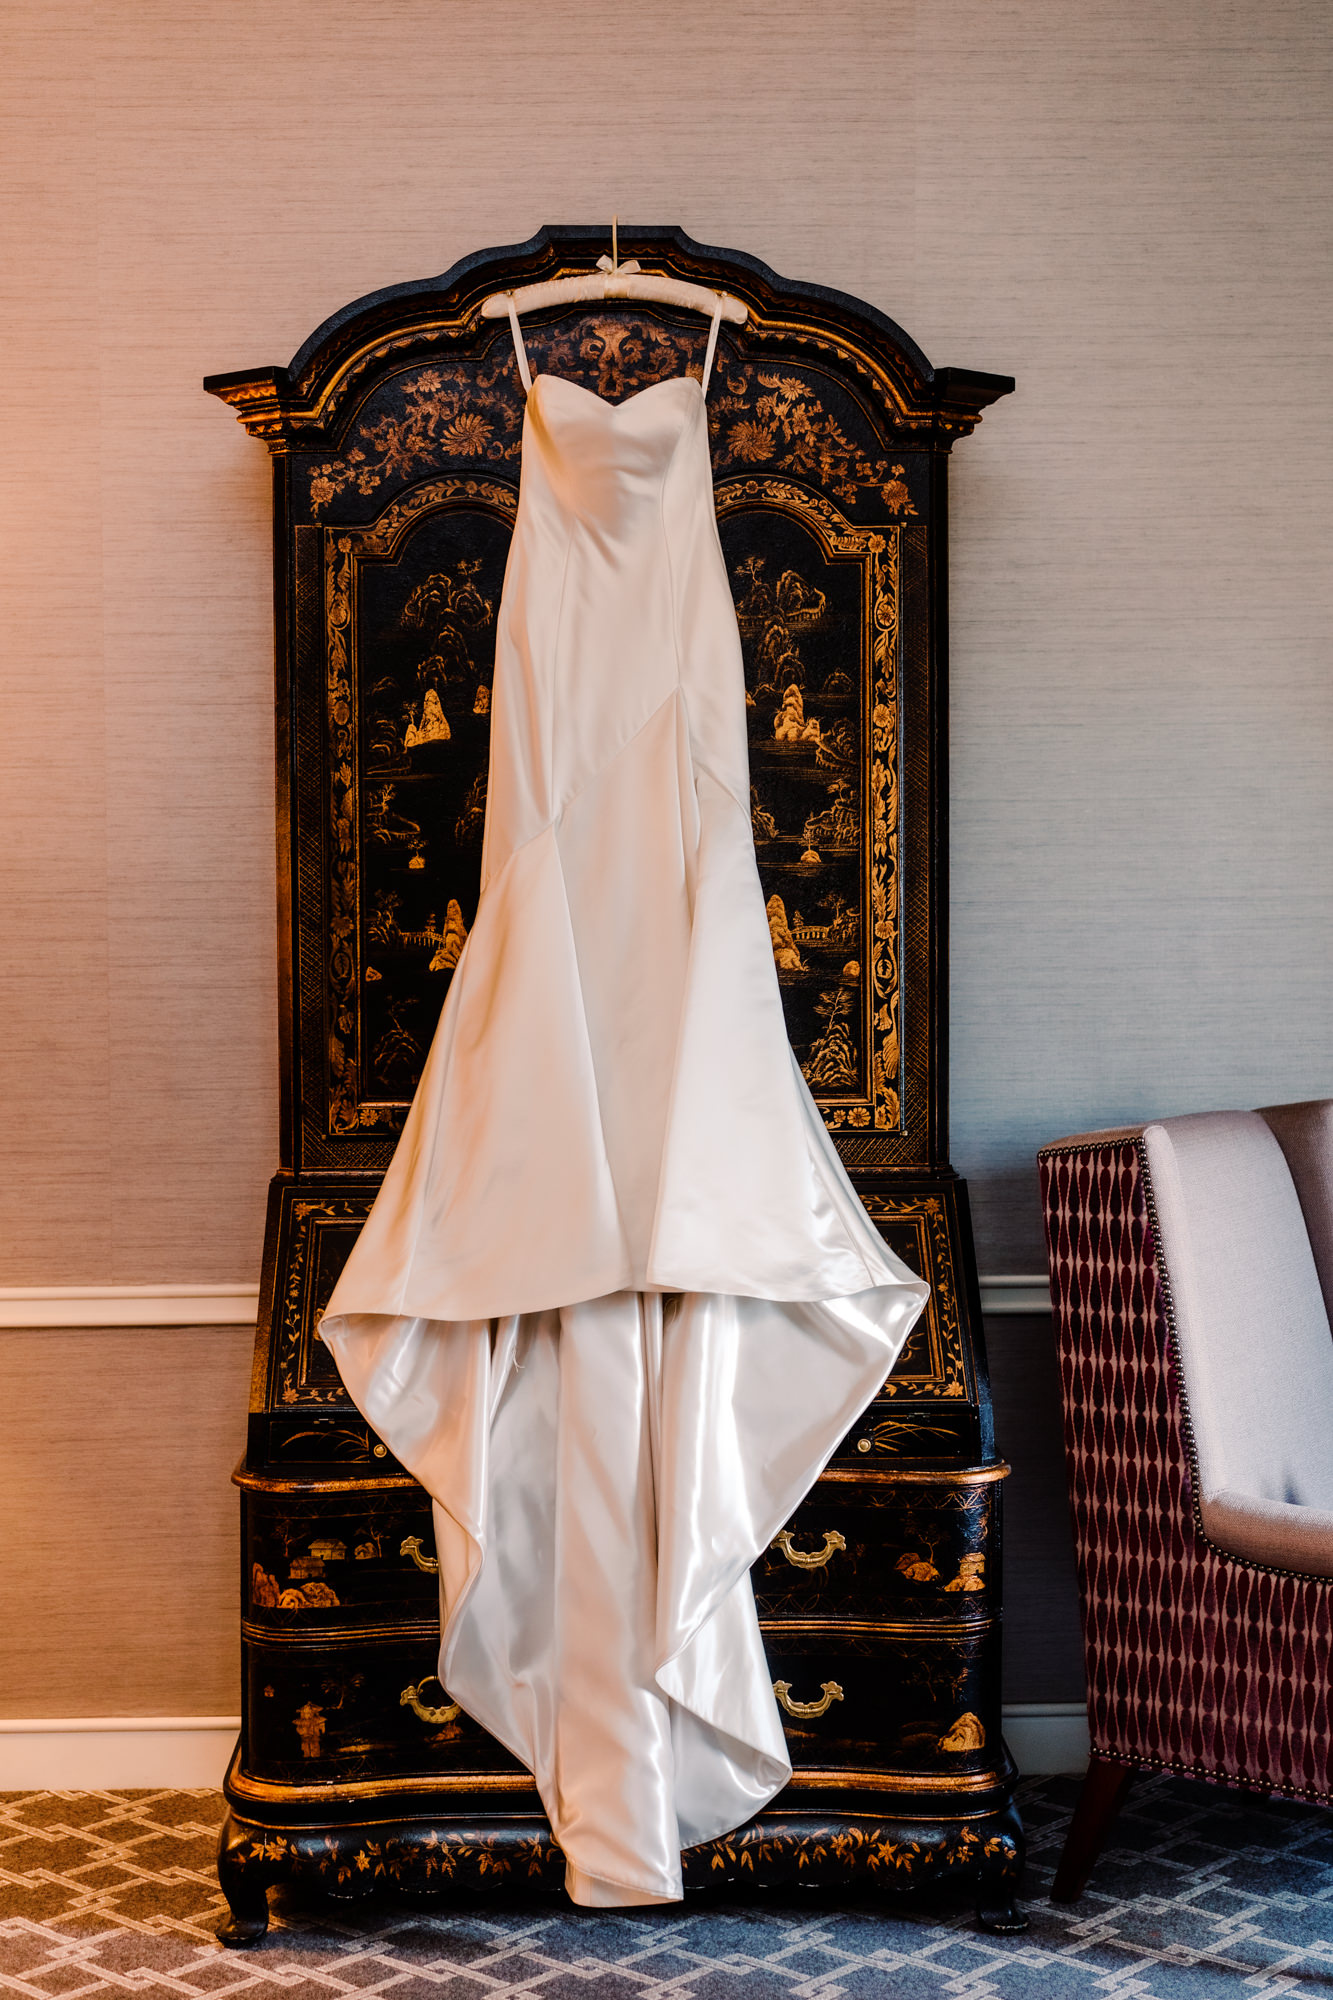 Mary's silk wedding gown